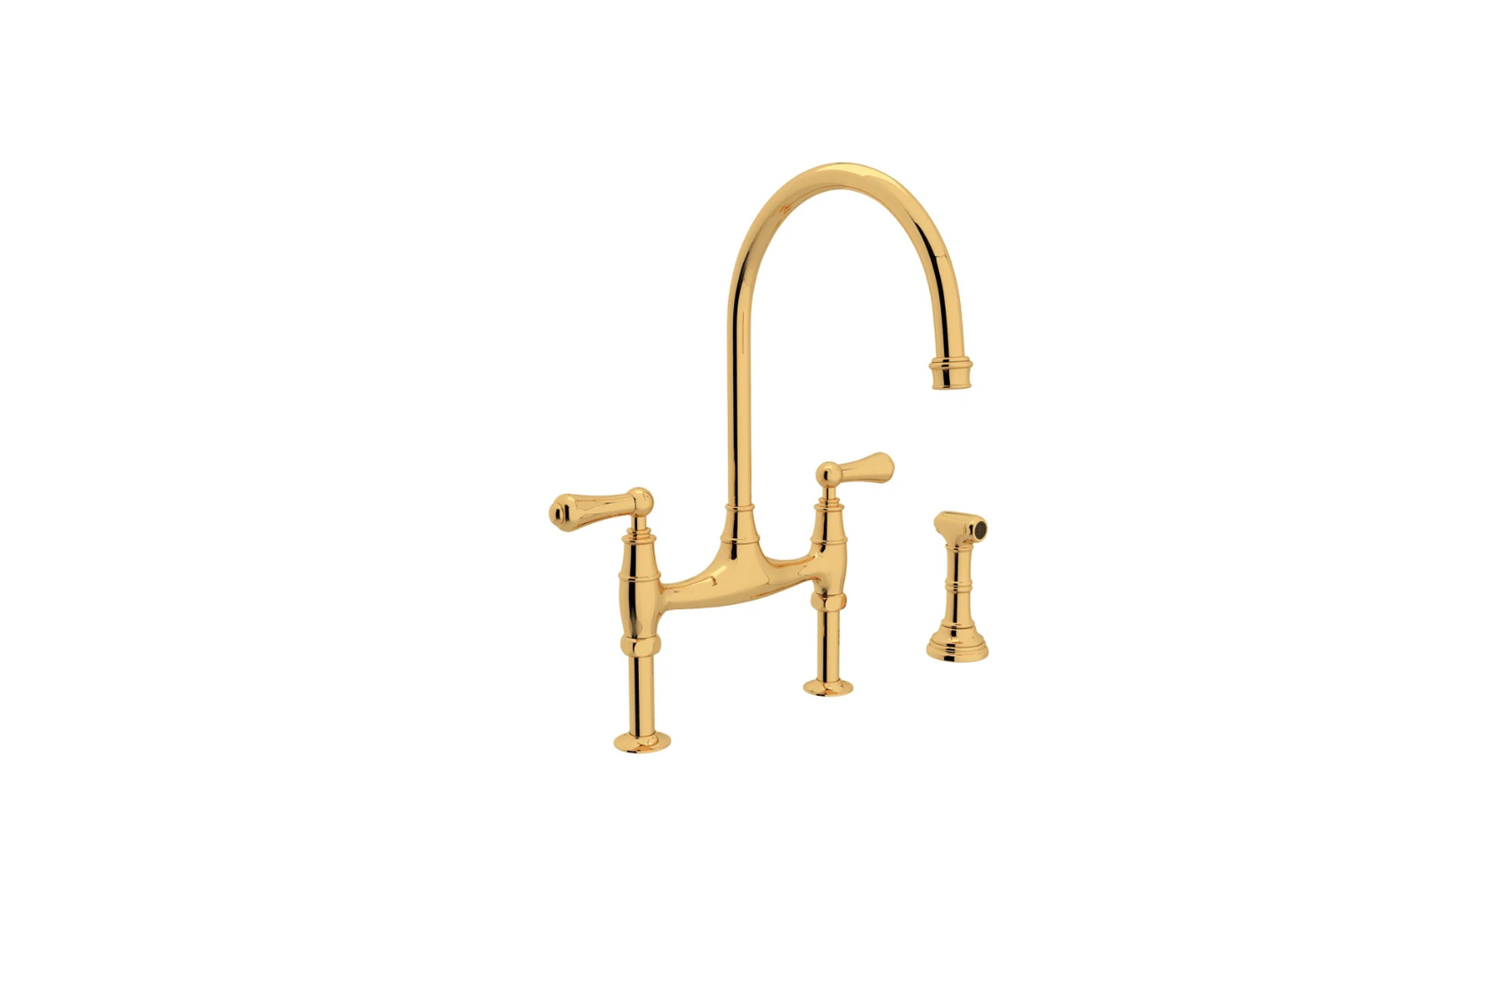 the perrin & rowe georgian era bridge faucet in unlacquered brass is $2,0 16